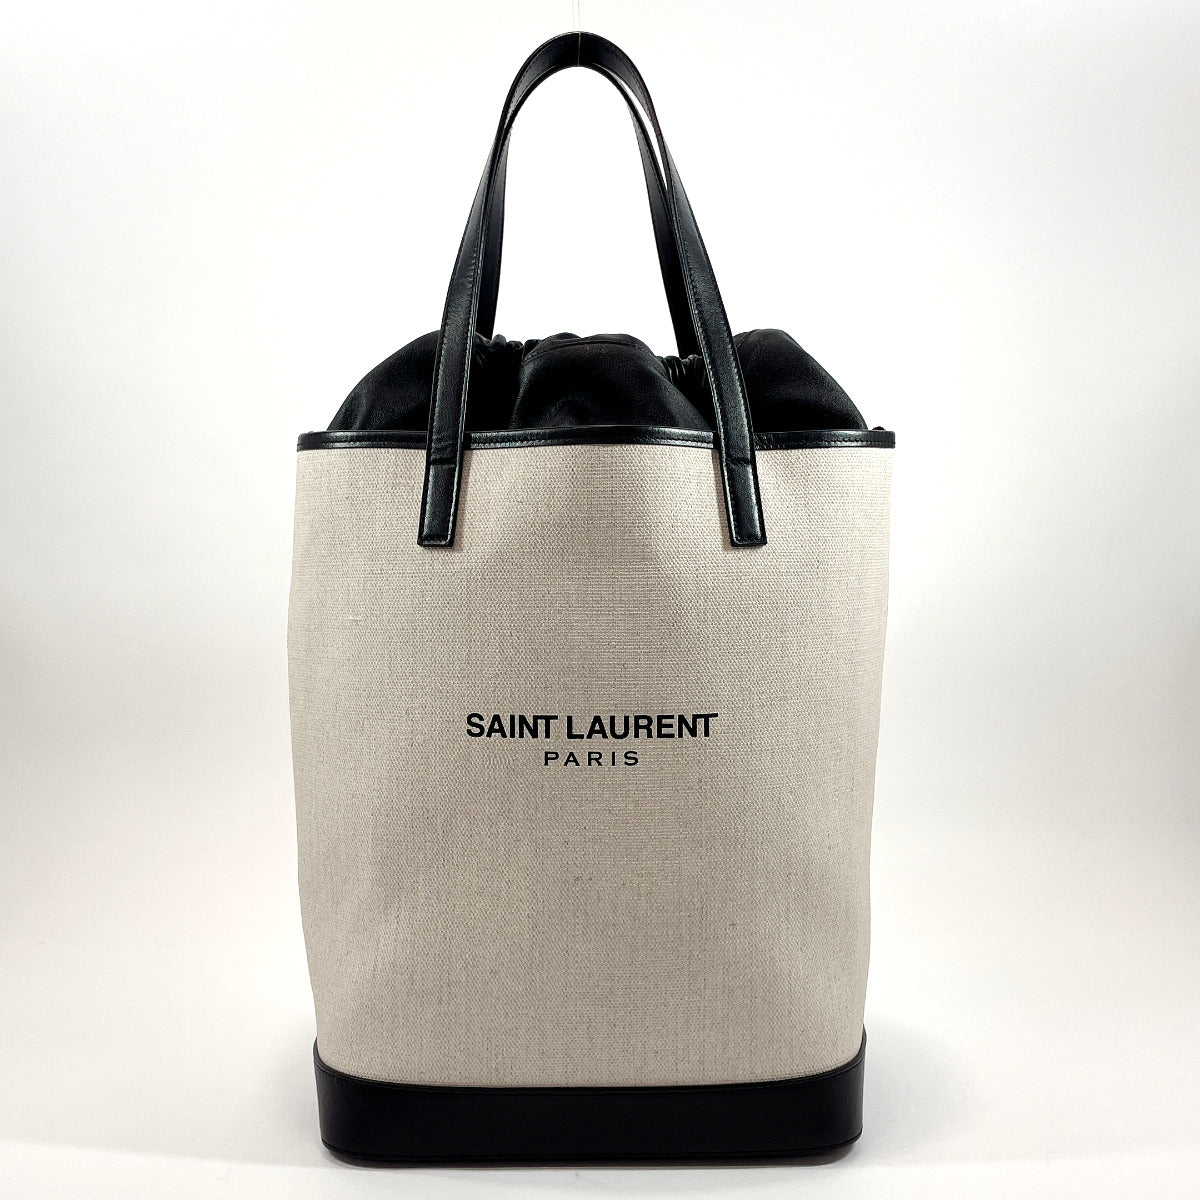 Saint Laurent Paris Tote Bag 551595 Teddy Tote Canvas/Leather White Women used